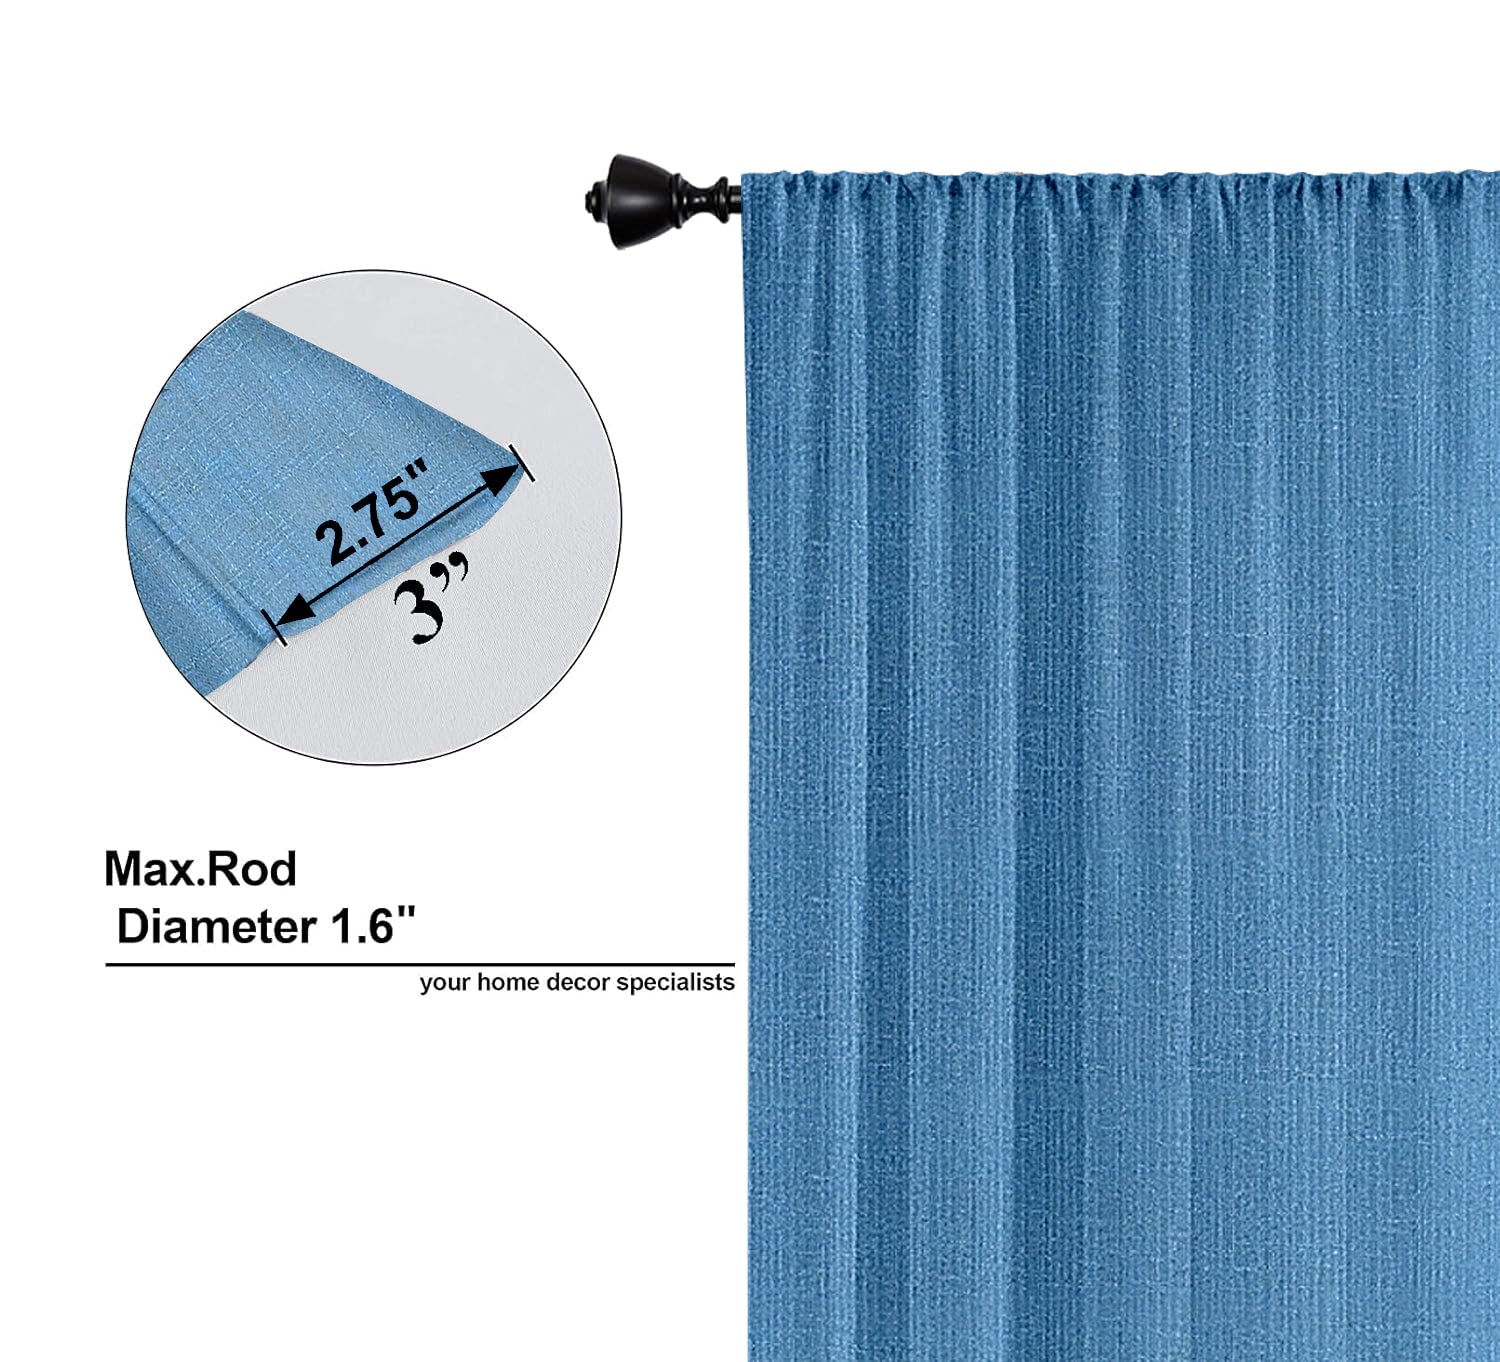 sheer-curtain-blue